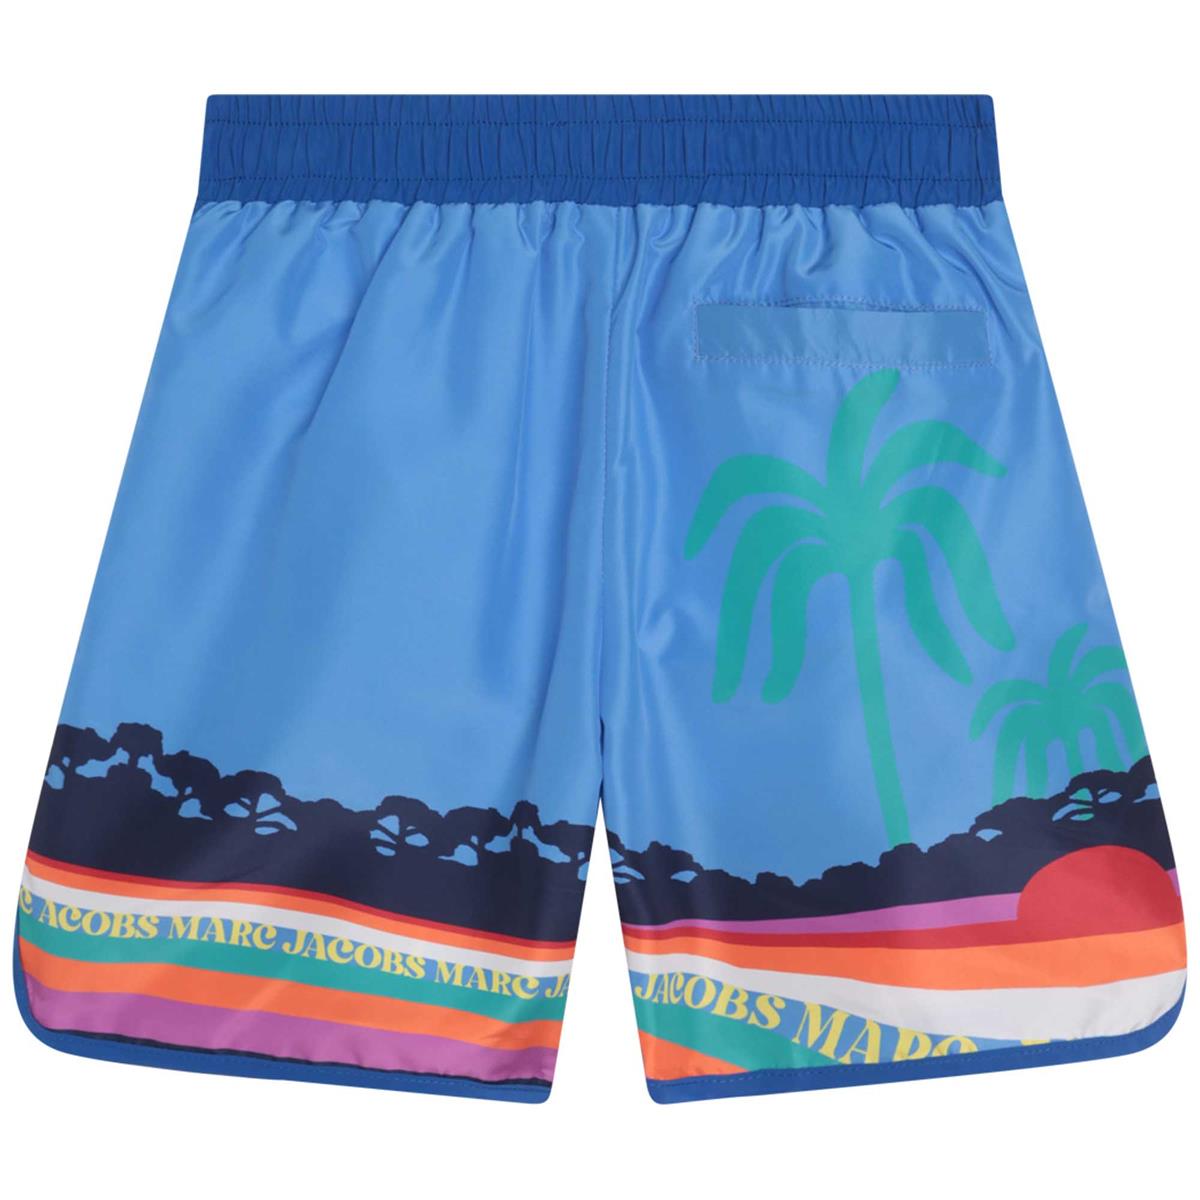 Boys Blue Swim Shorts